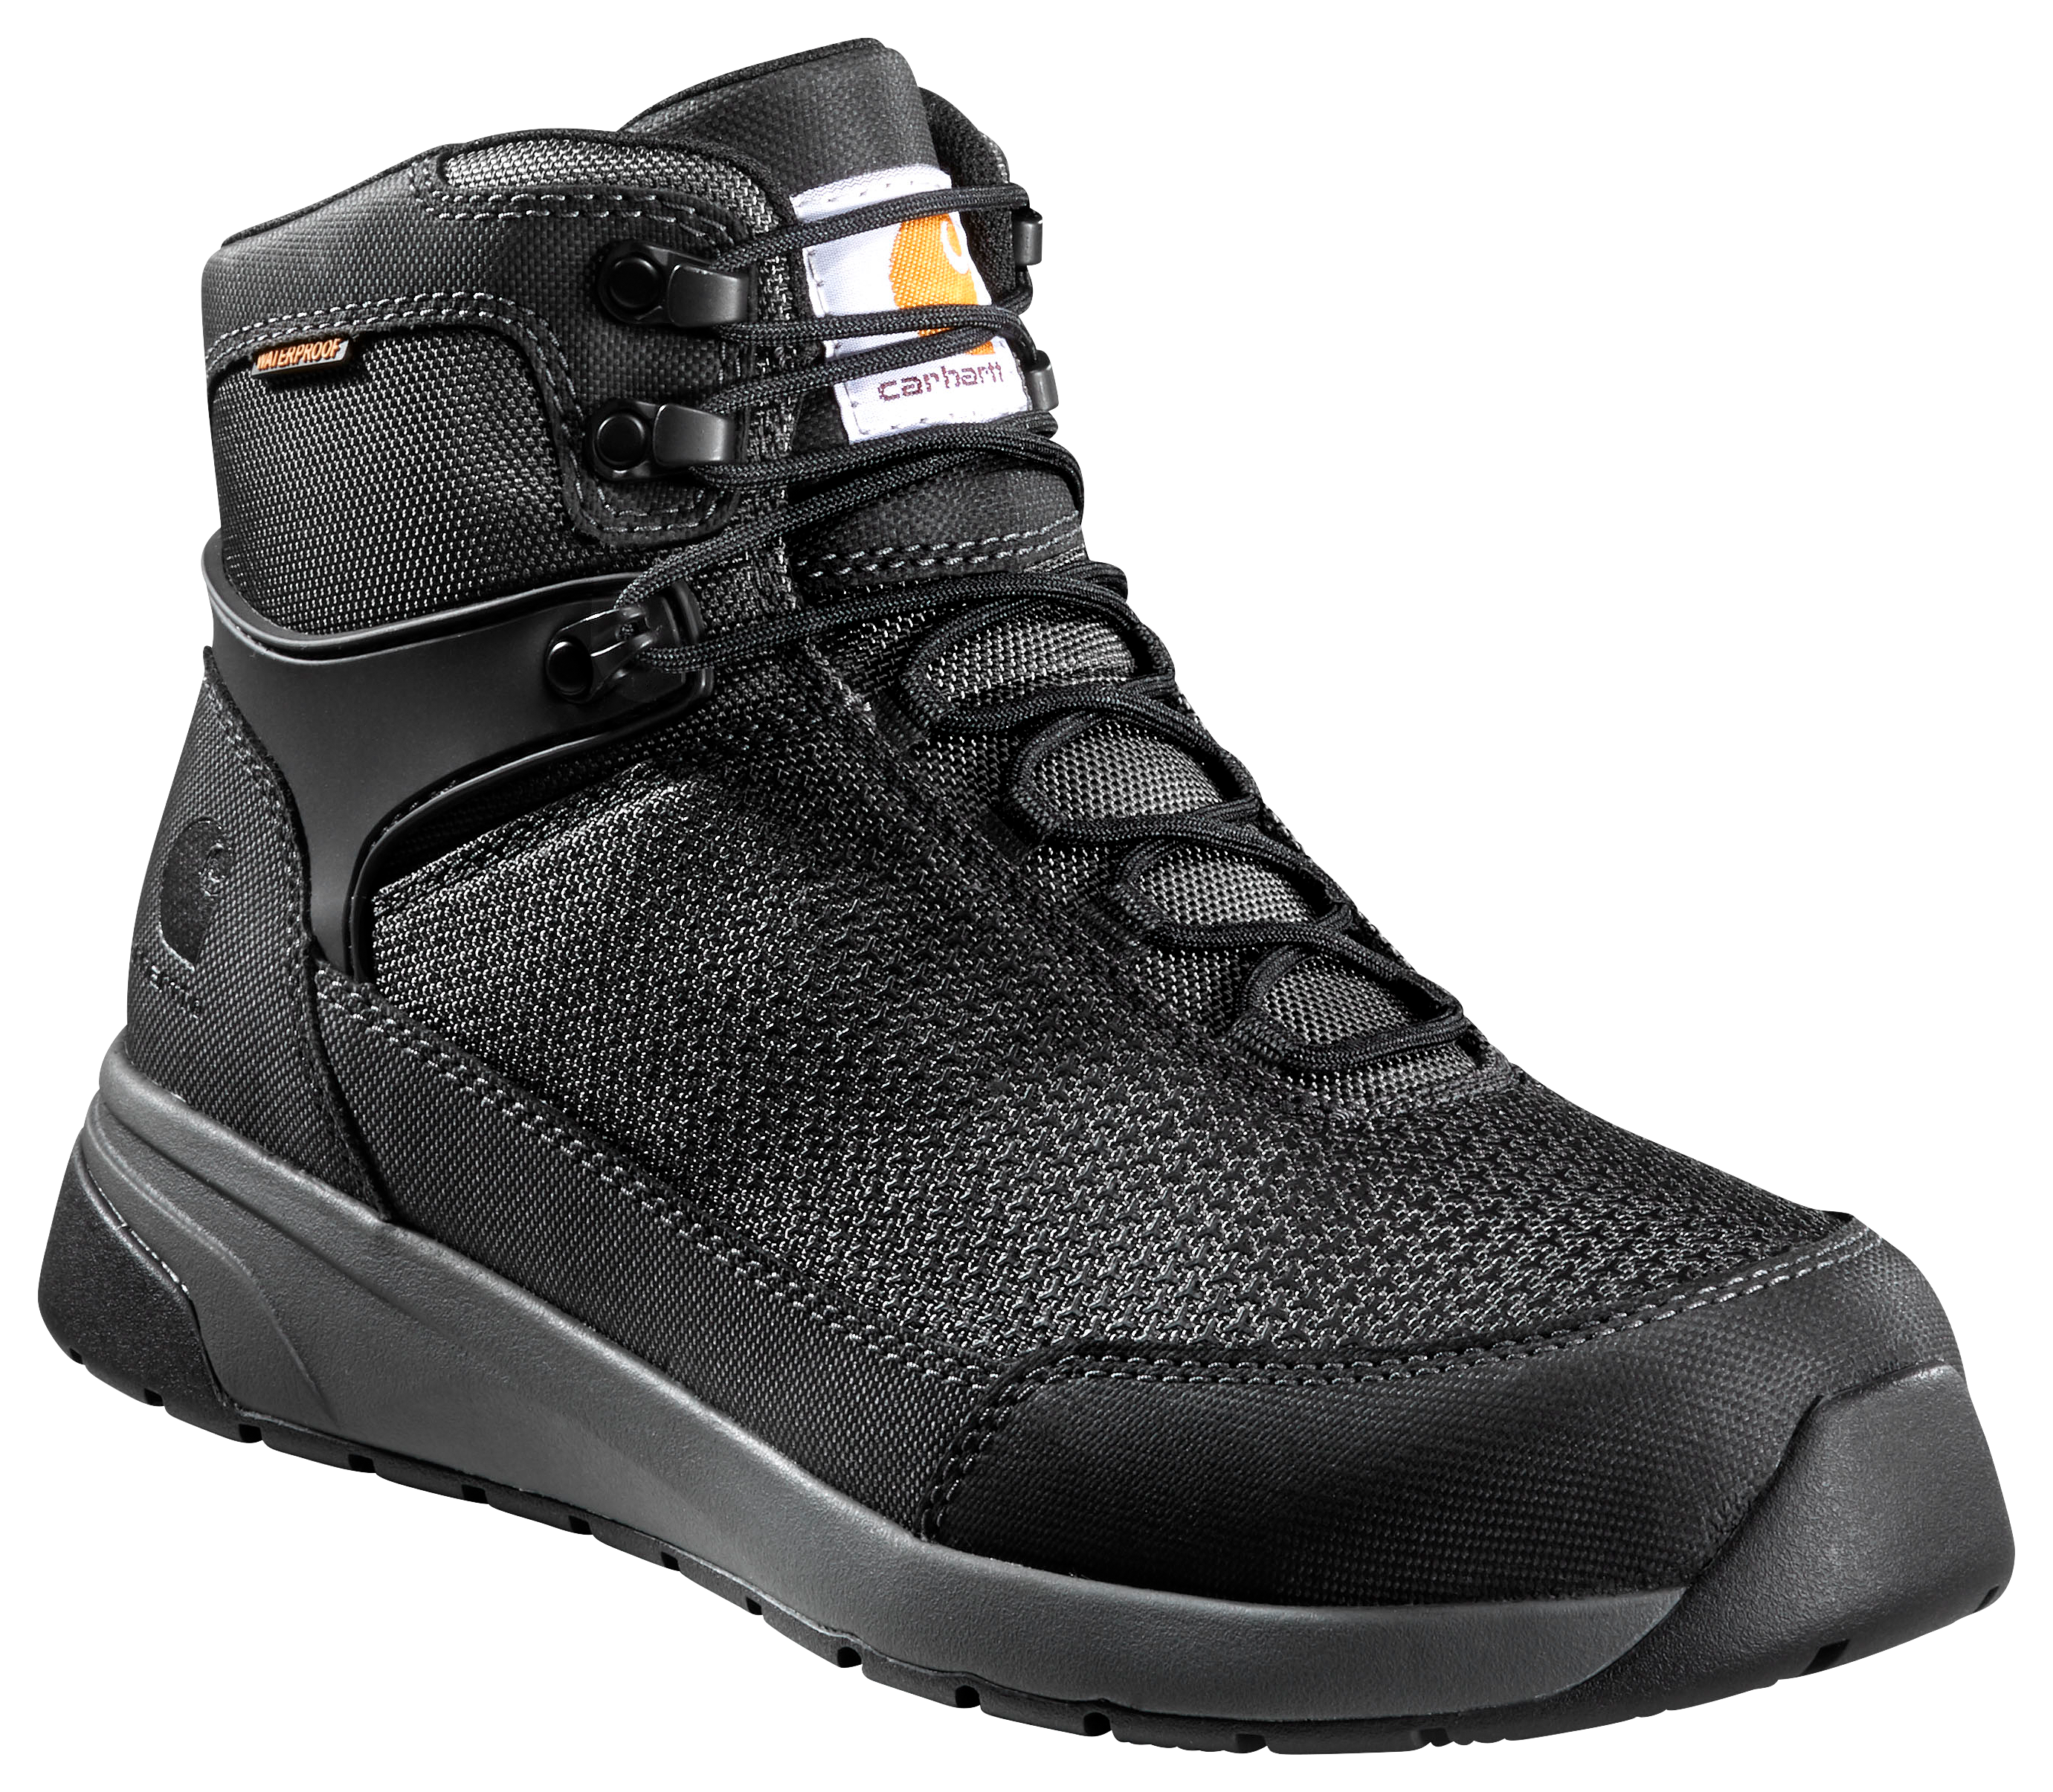 Carhartt Force 6"" Nano Composite-Toe Work Boots for Men - Black - 12W